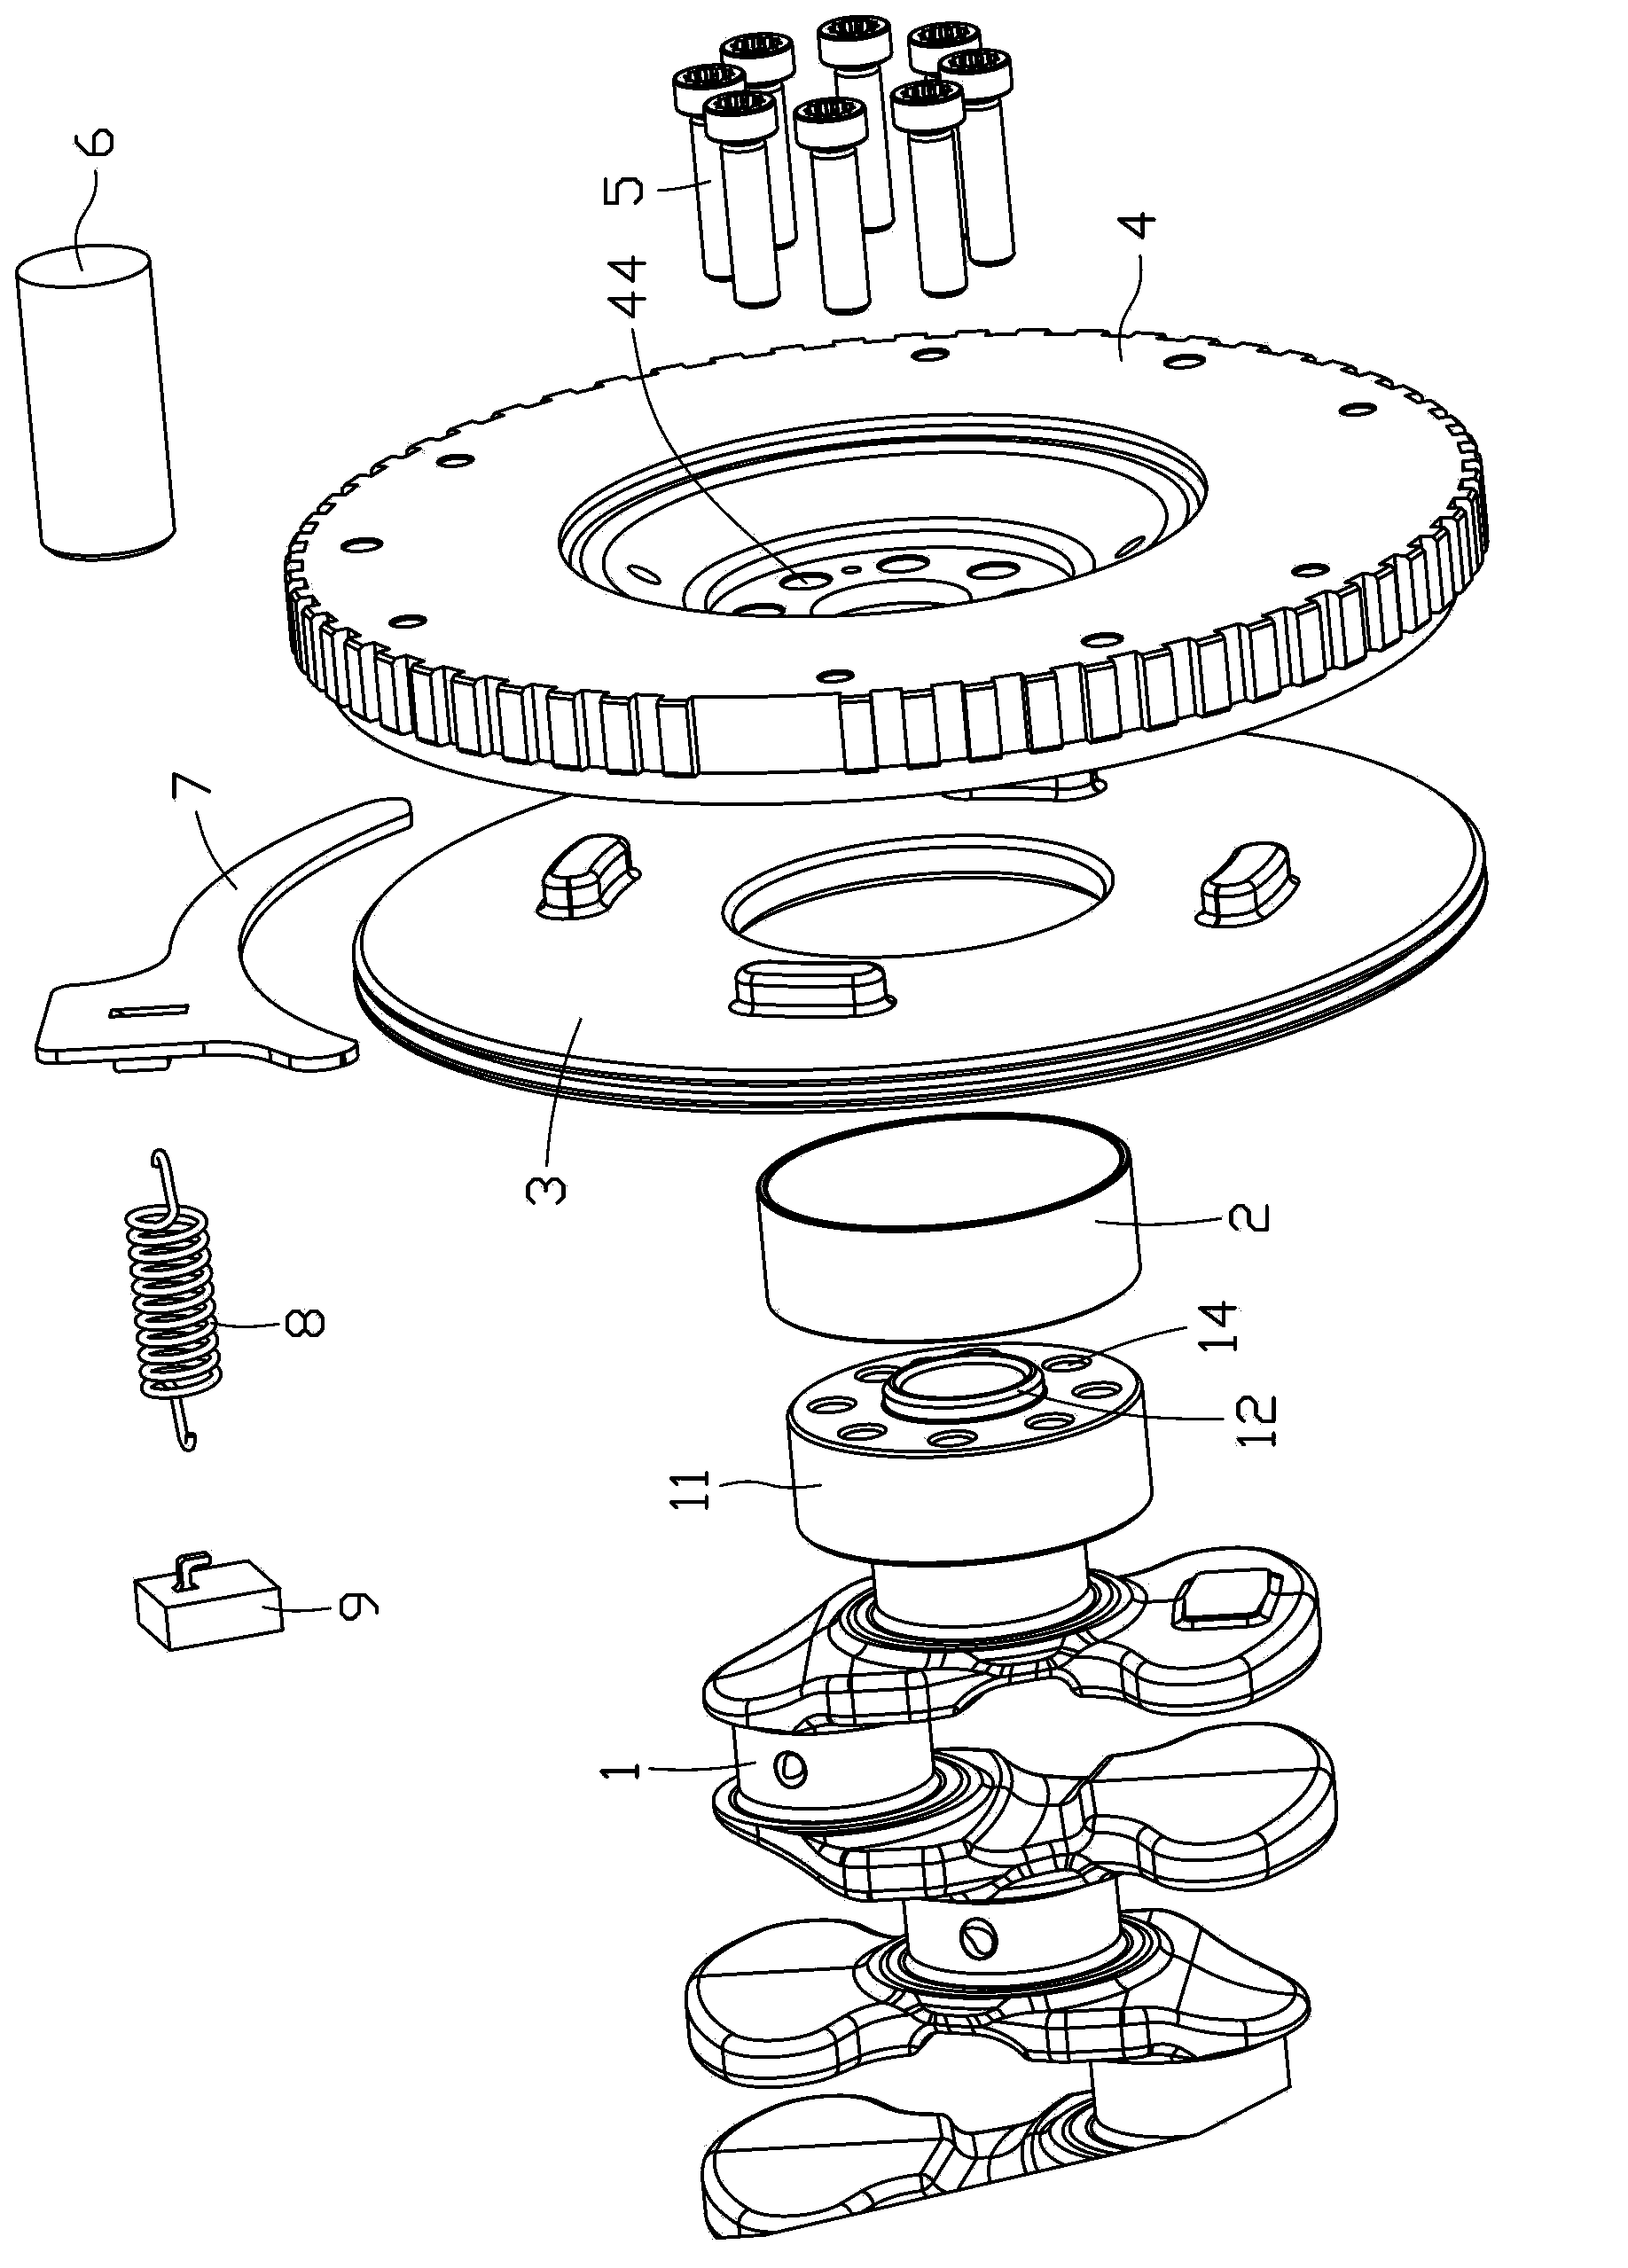 Variable inertia flywheel structure